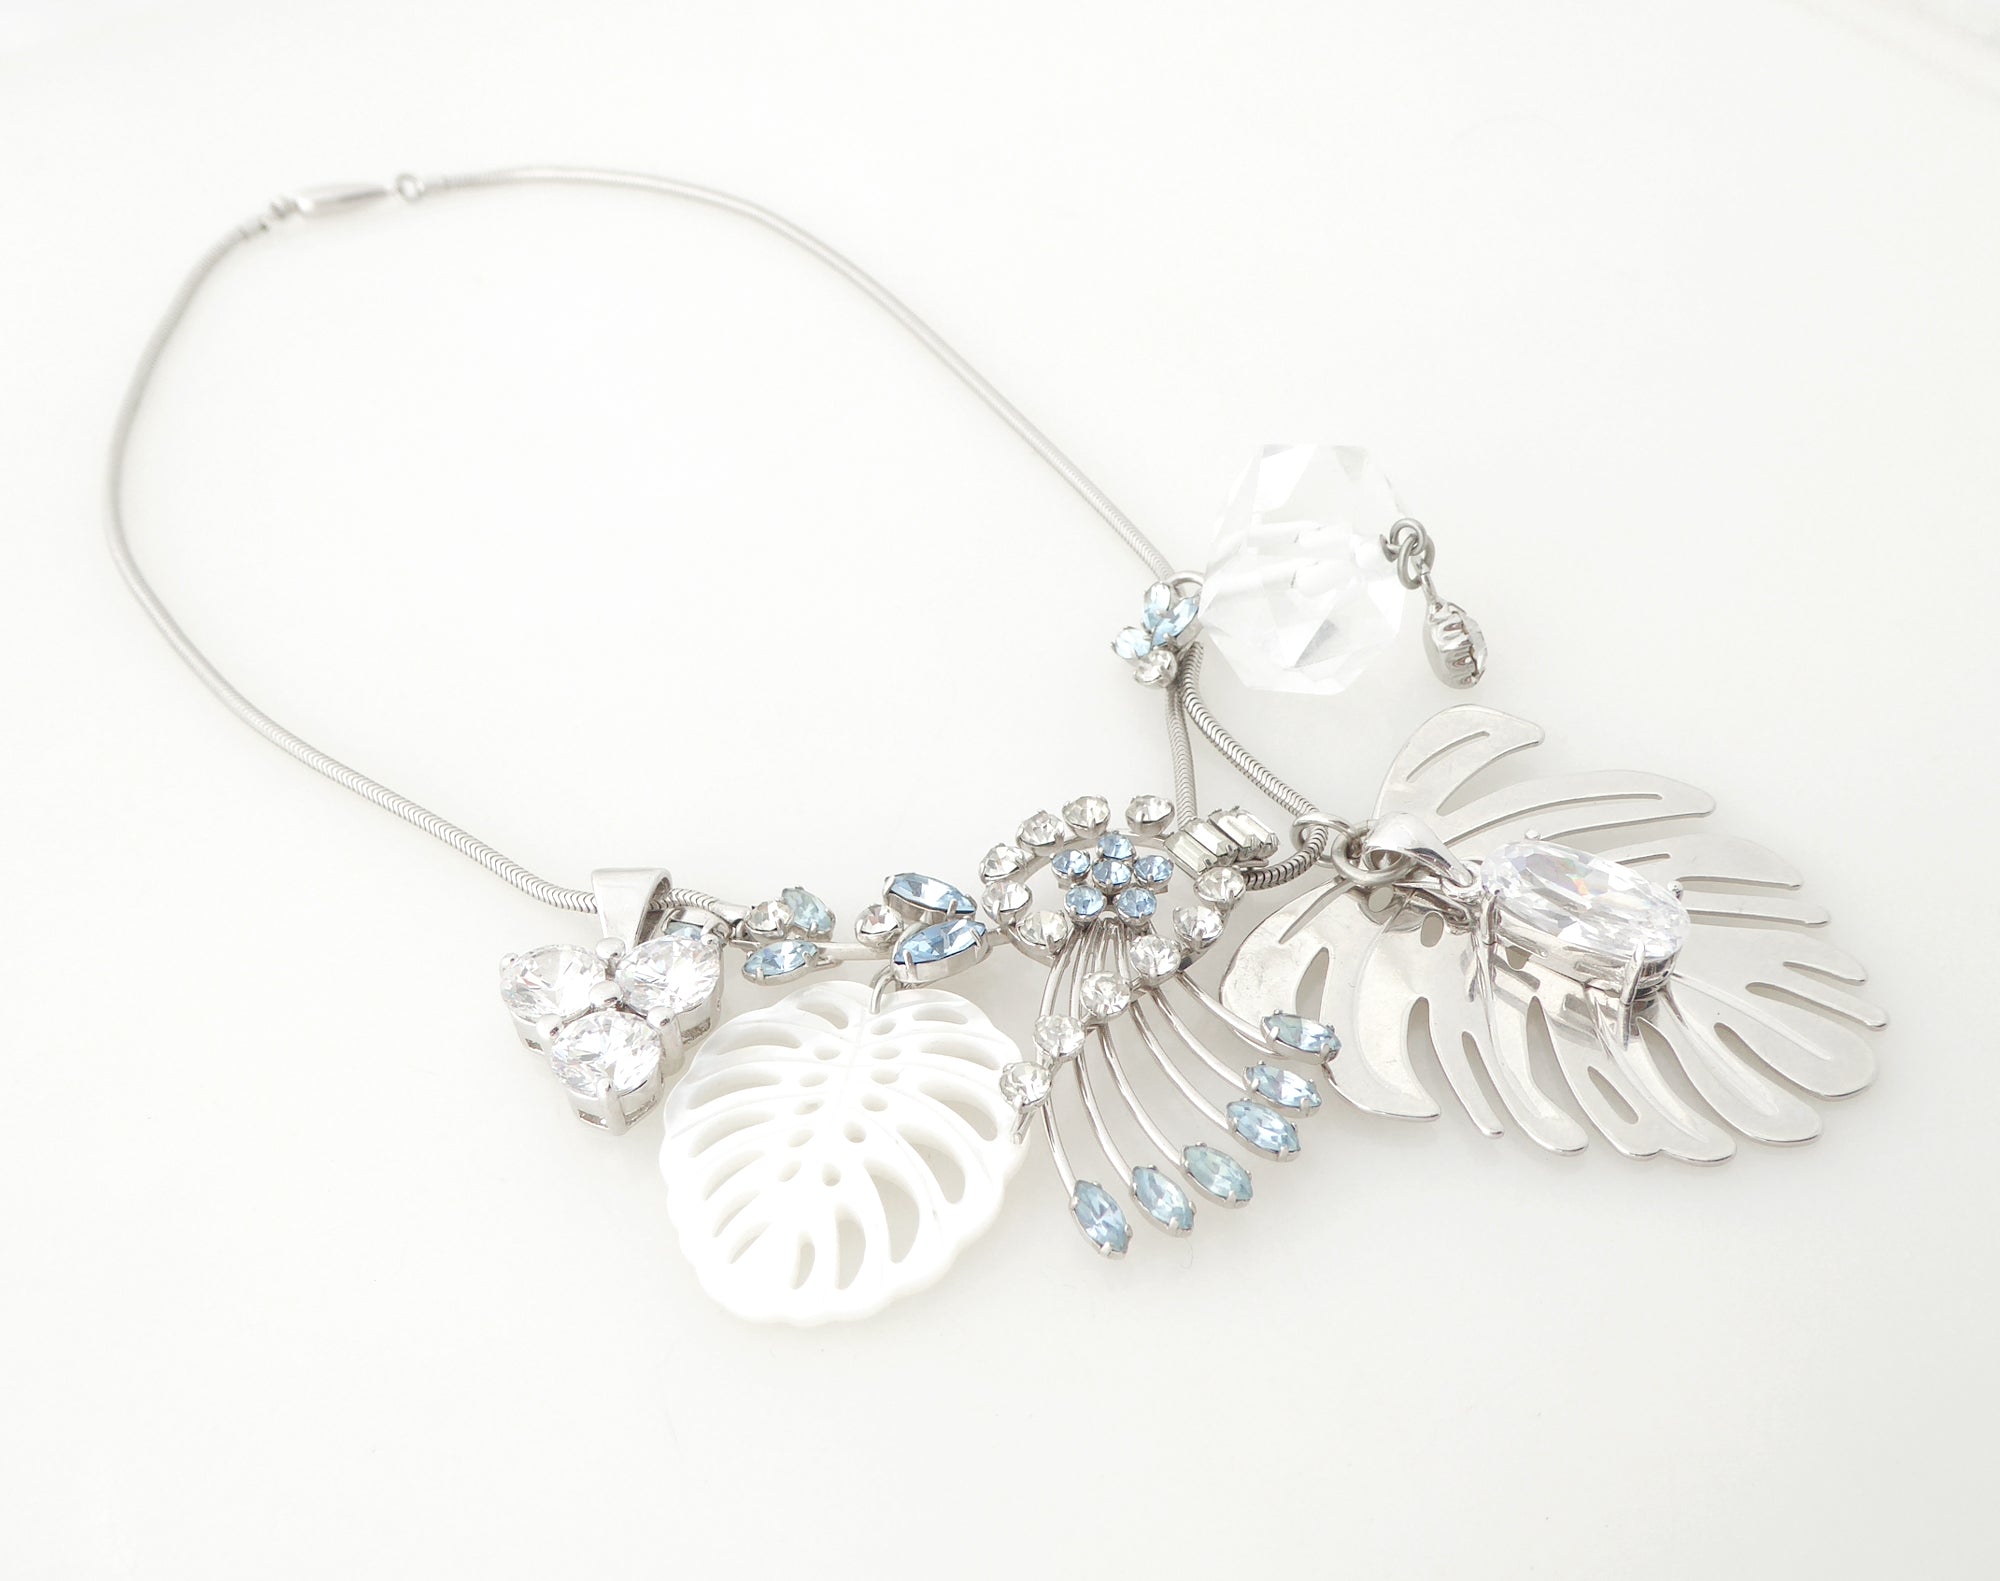 Silver monstera leaf cluster necklace by Jenny Dayco 2